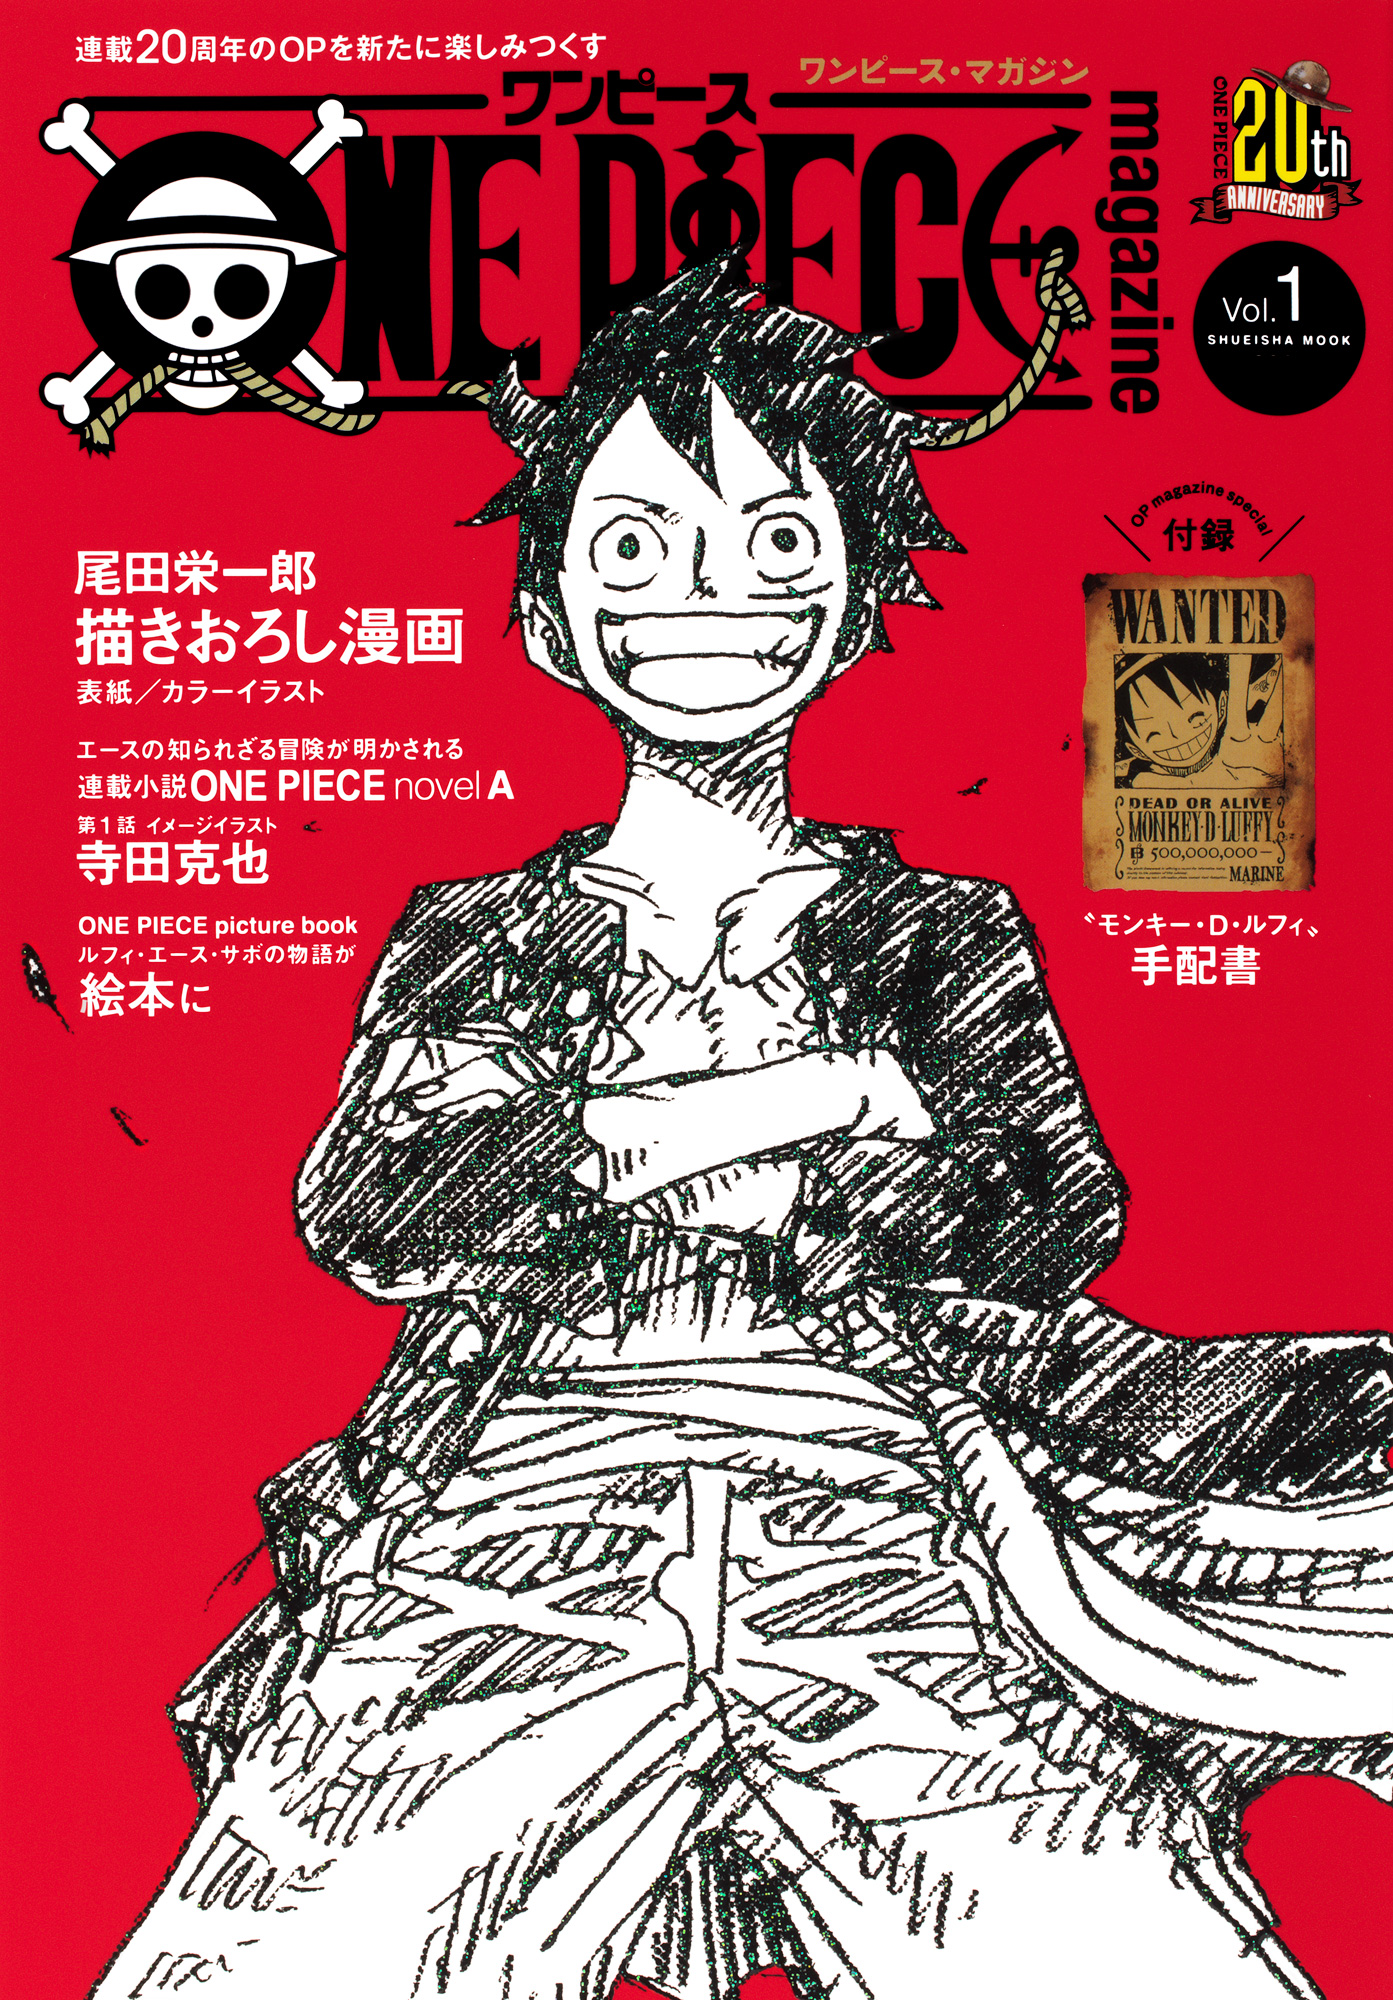 ONE PIECE magazine Vol.1 - 尾田栄一郎 - 漫画・無料試し読みなら ...